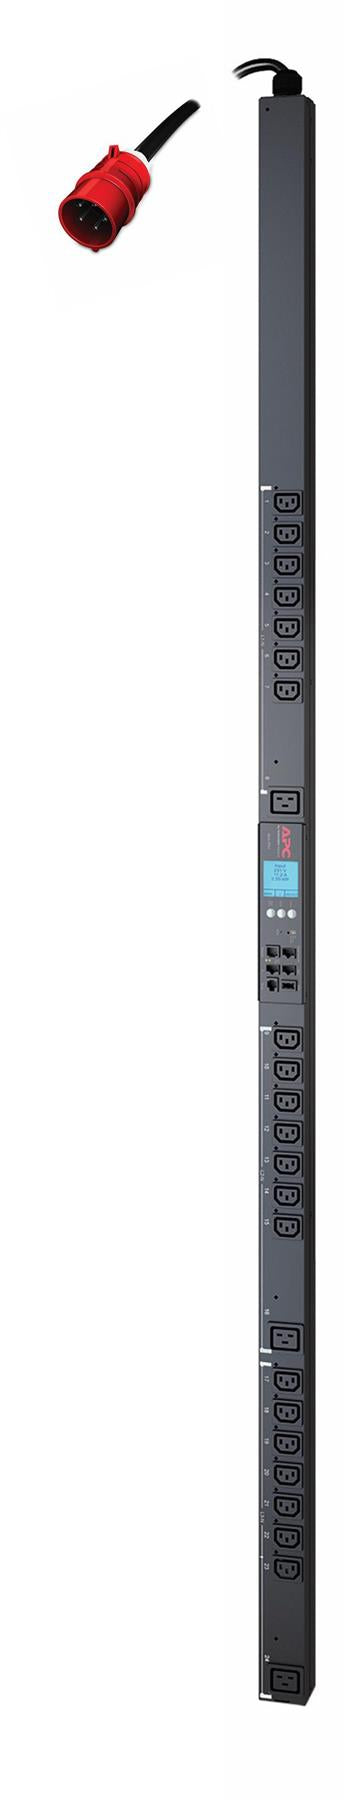 APC AP8681 Power Distribution Unit PDU 24 AC outlets Rack Mountable 0U Black